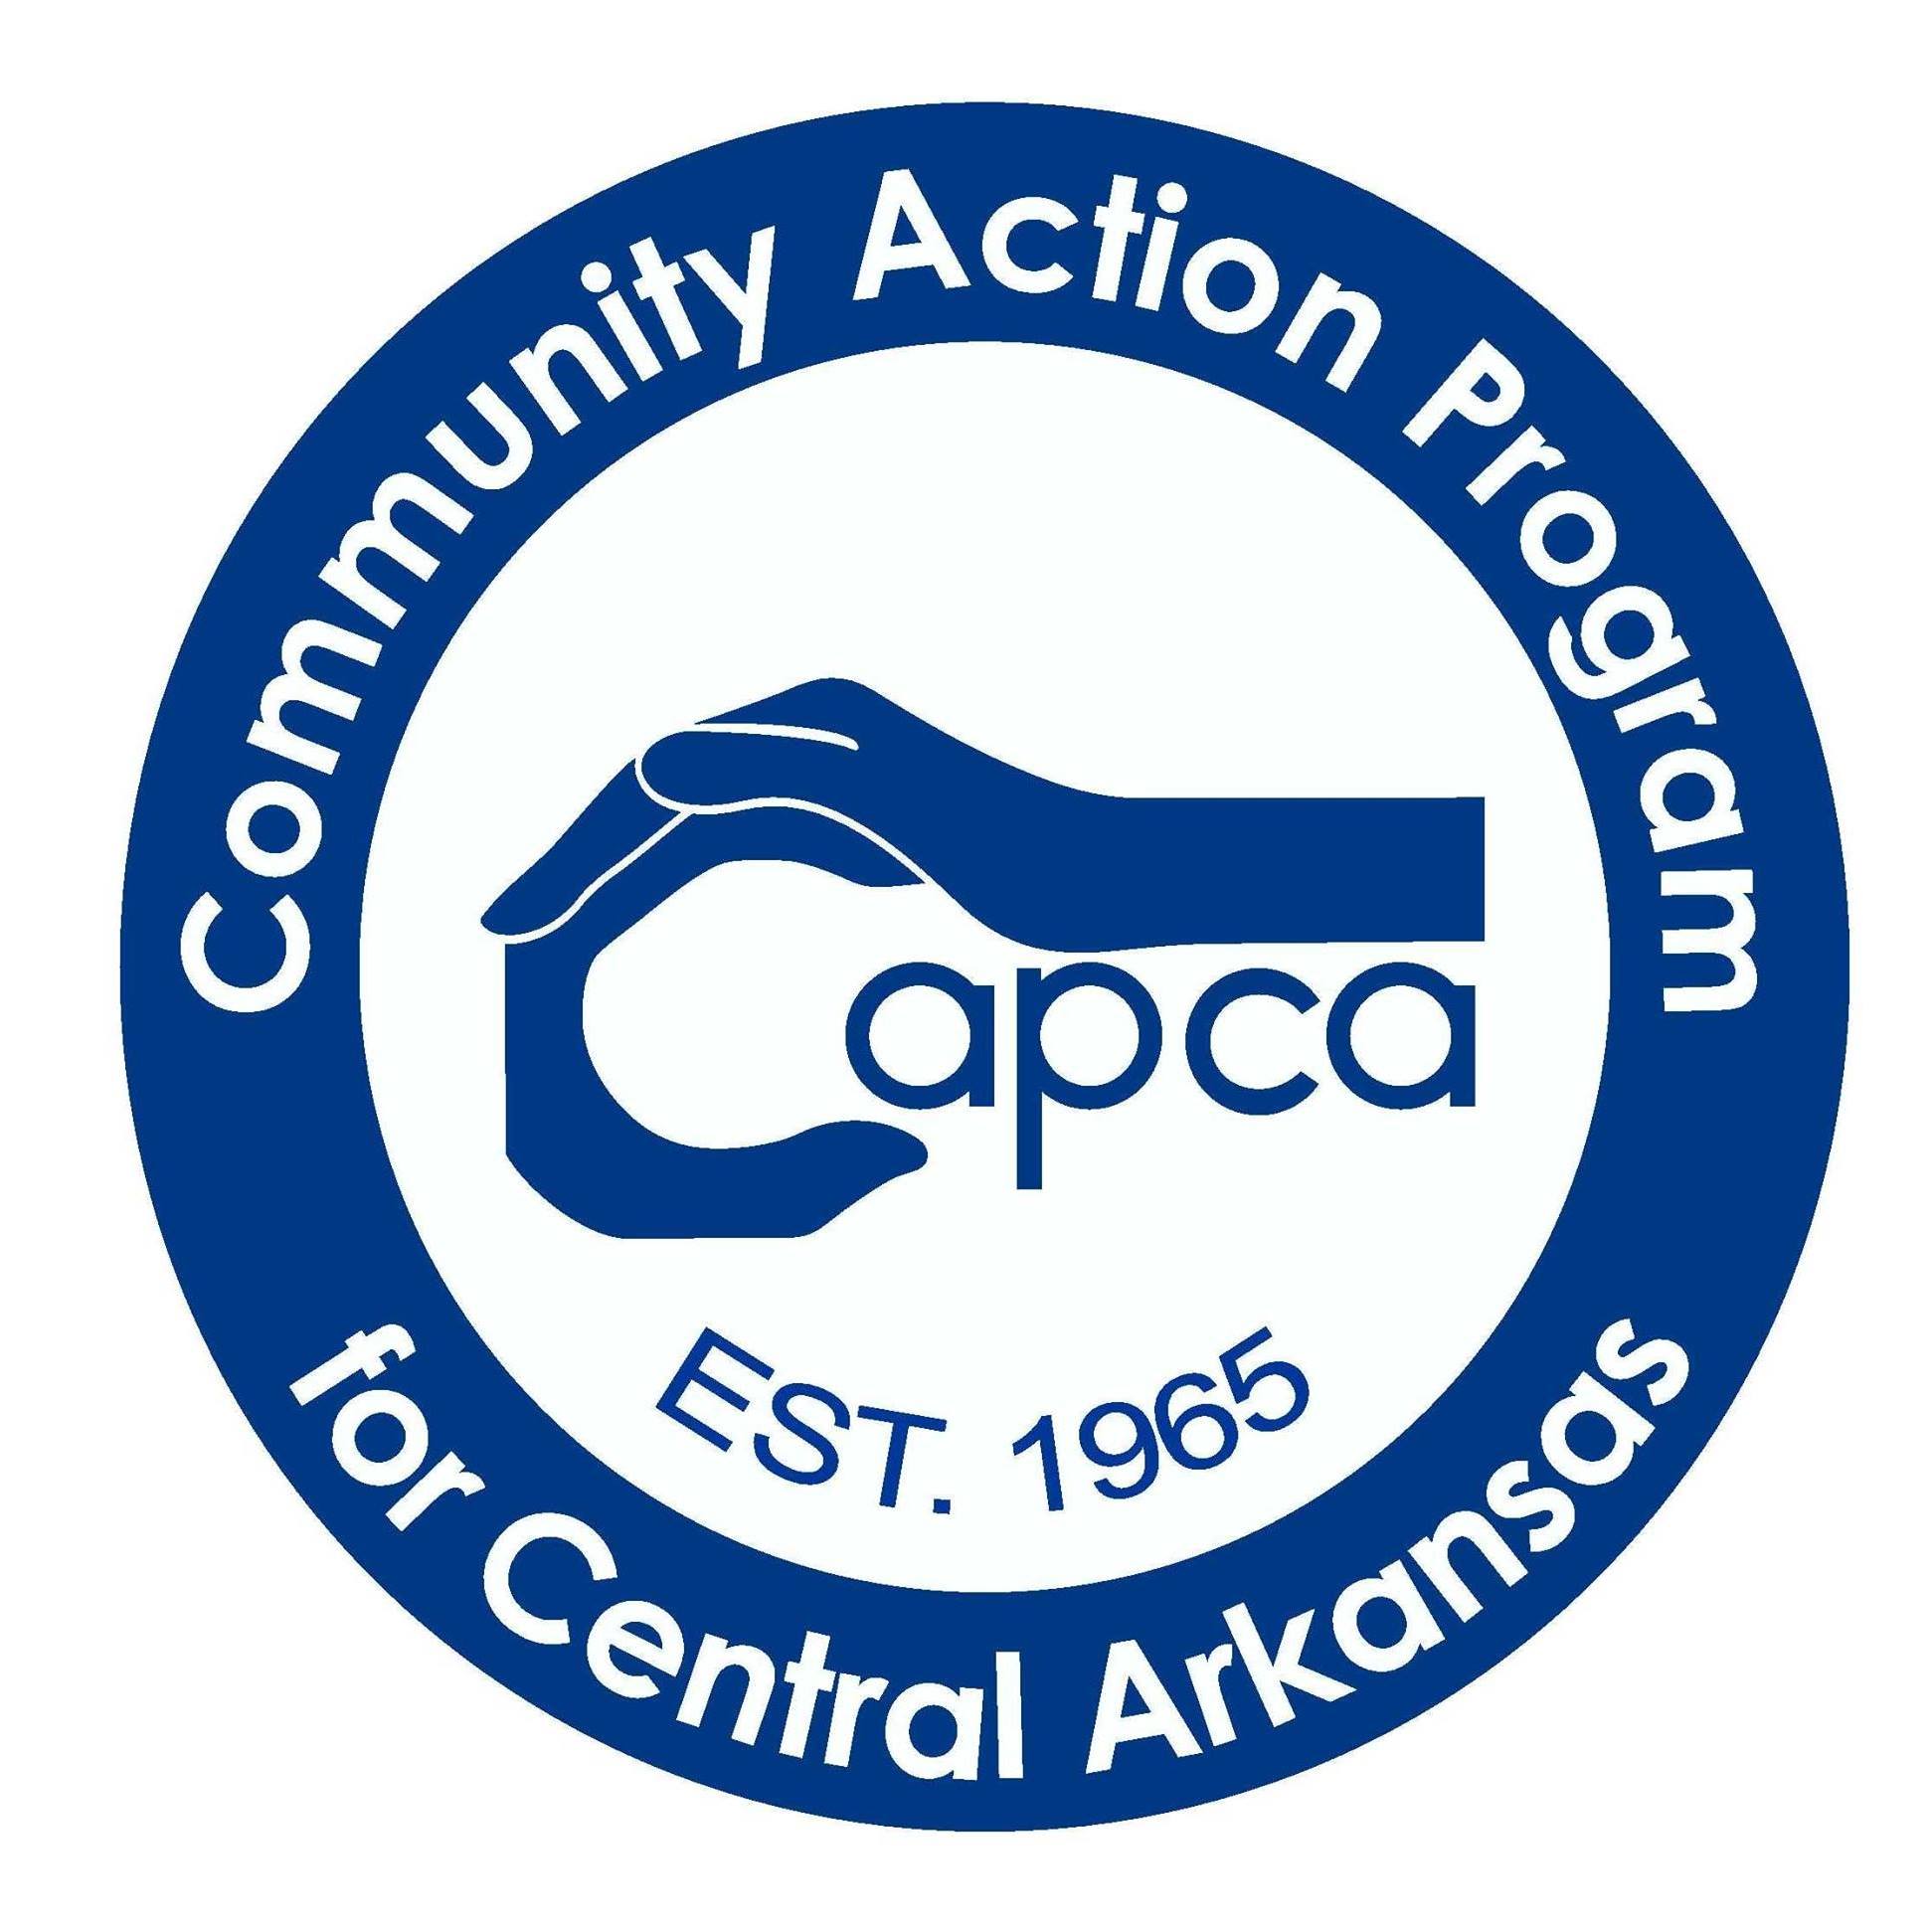 Community Action Program for Central Arkansas CAPCA